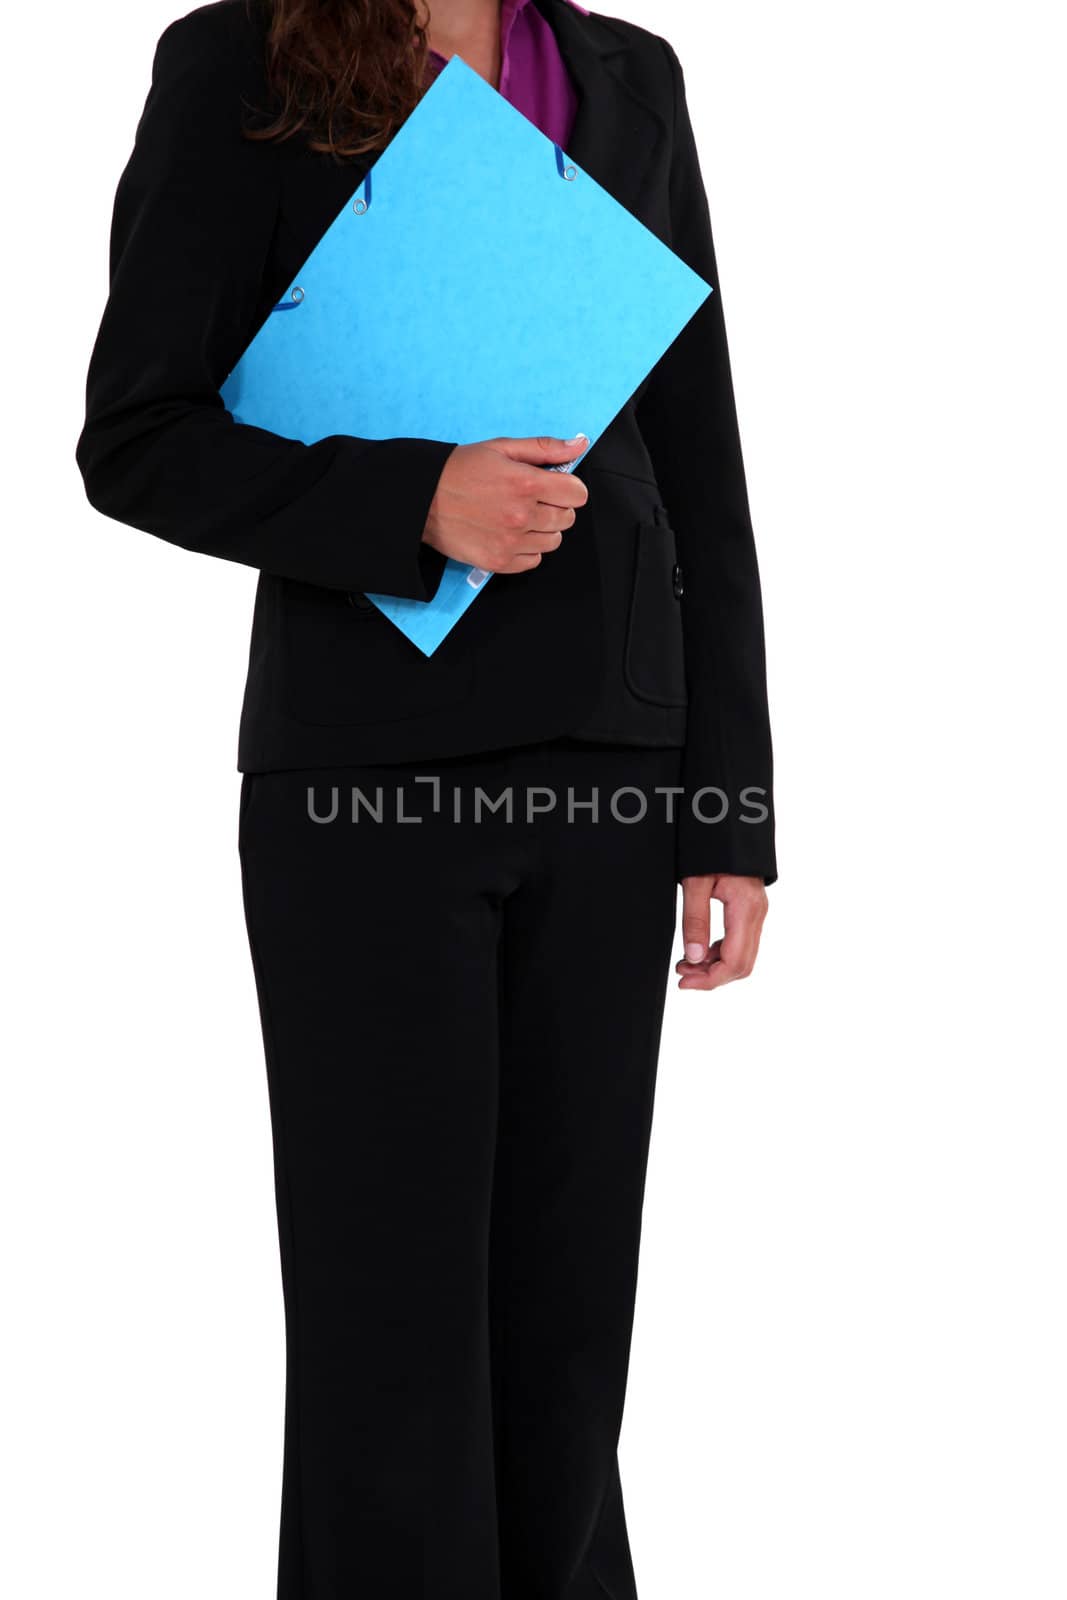 Woman holding folder